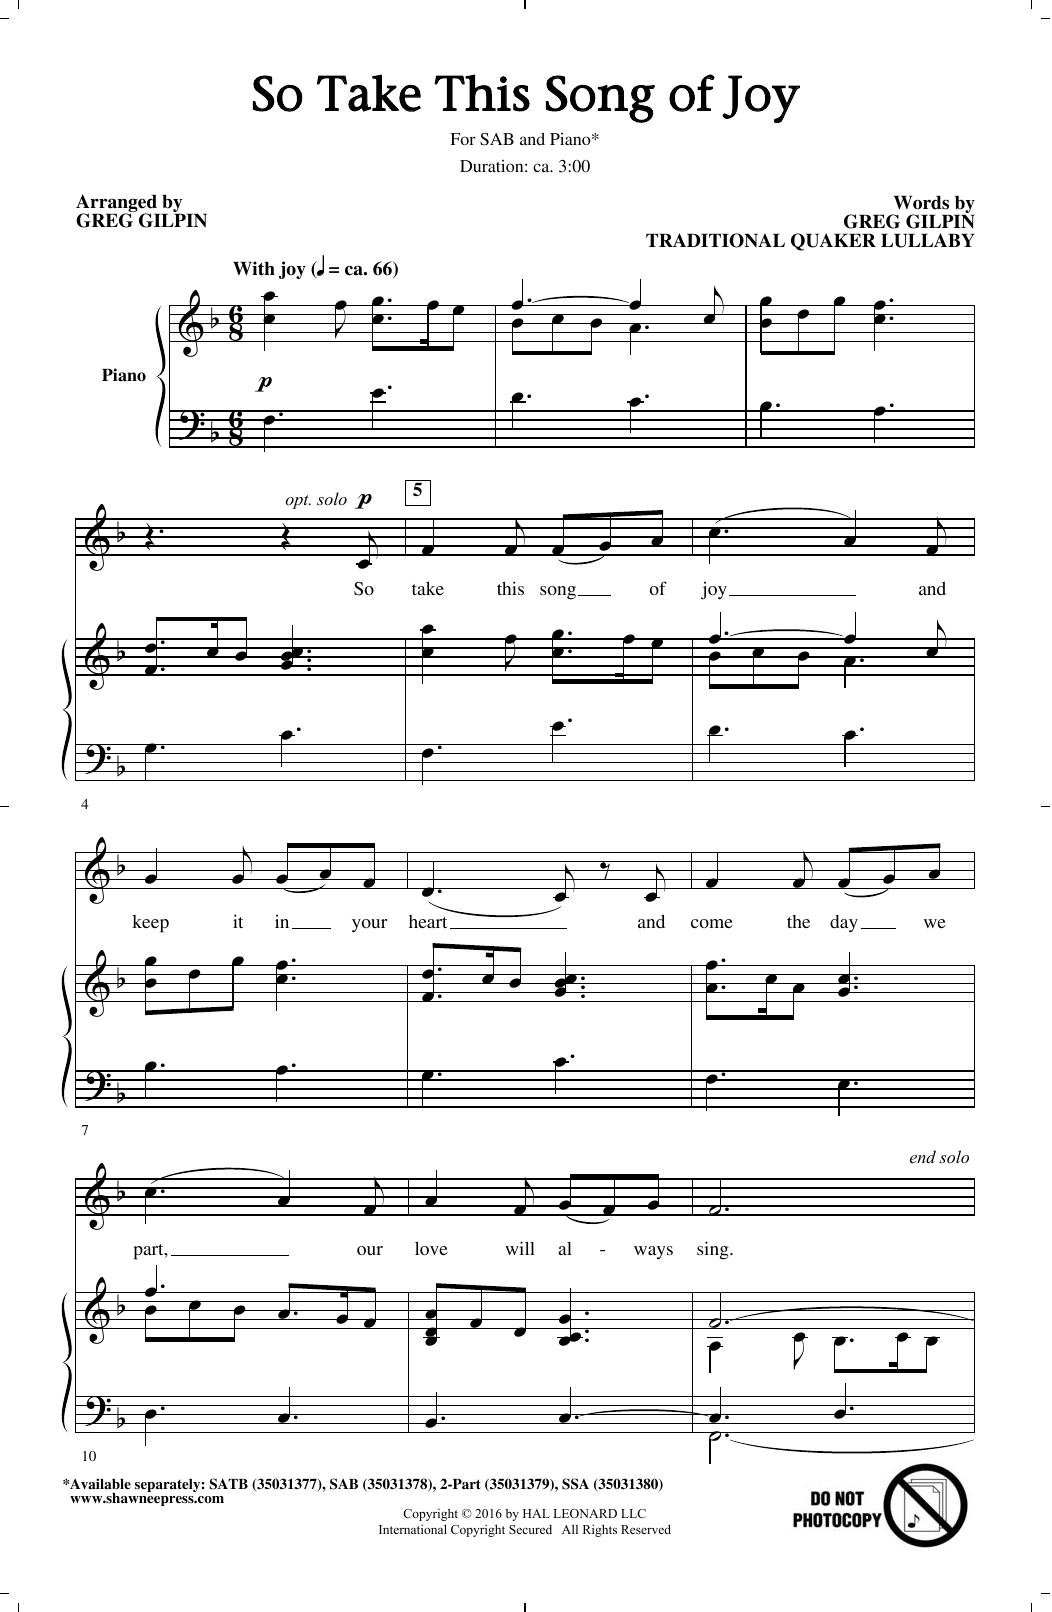 Greg Gilpin So Take This Song Of Joy Sheet Music Notes & Chords for 2-Part Choir - Download or Print PDF